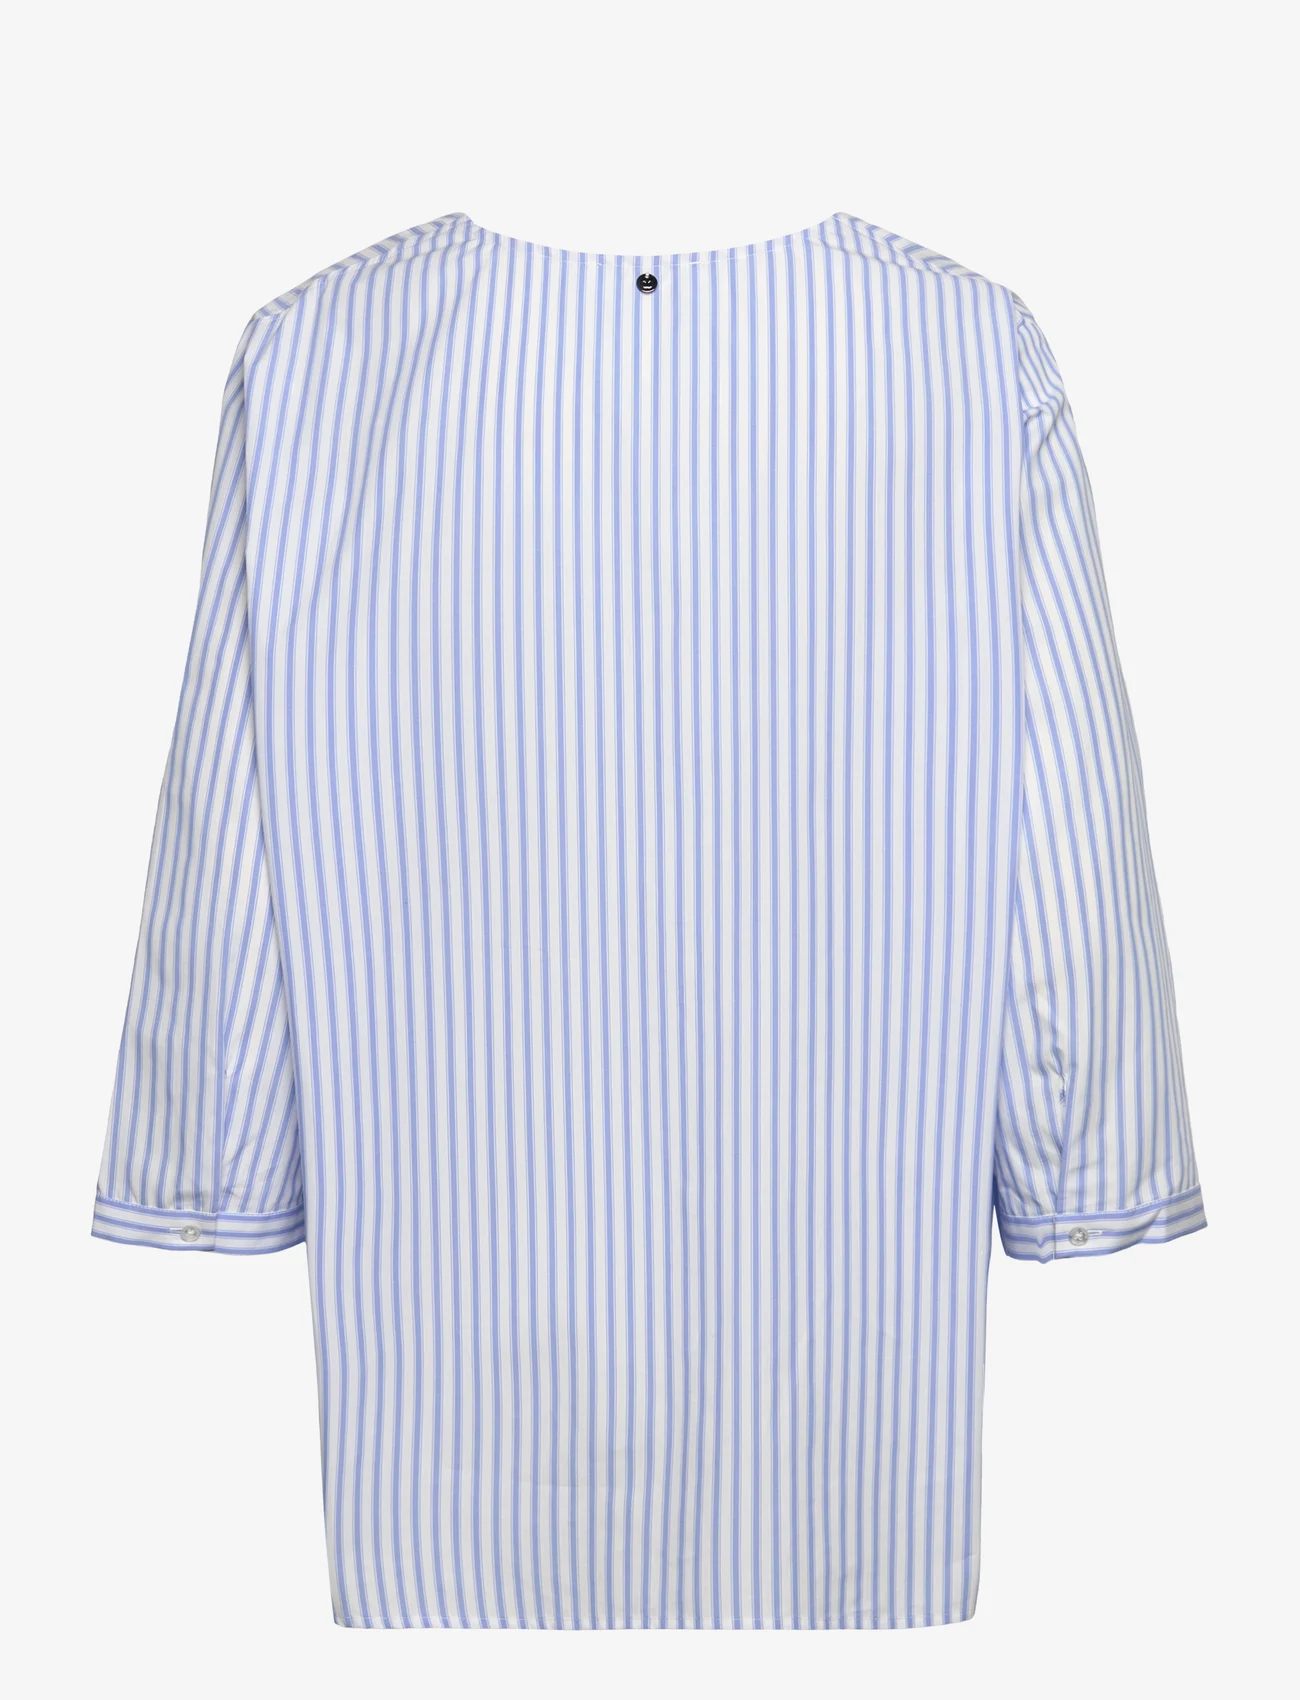 Gerry Weber Edition - BLOUSE 3/4 SLEEVE - long-sleeved blouses - ecru/white/blue stripes - 1